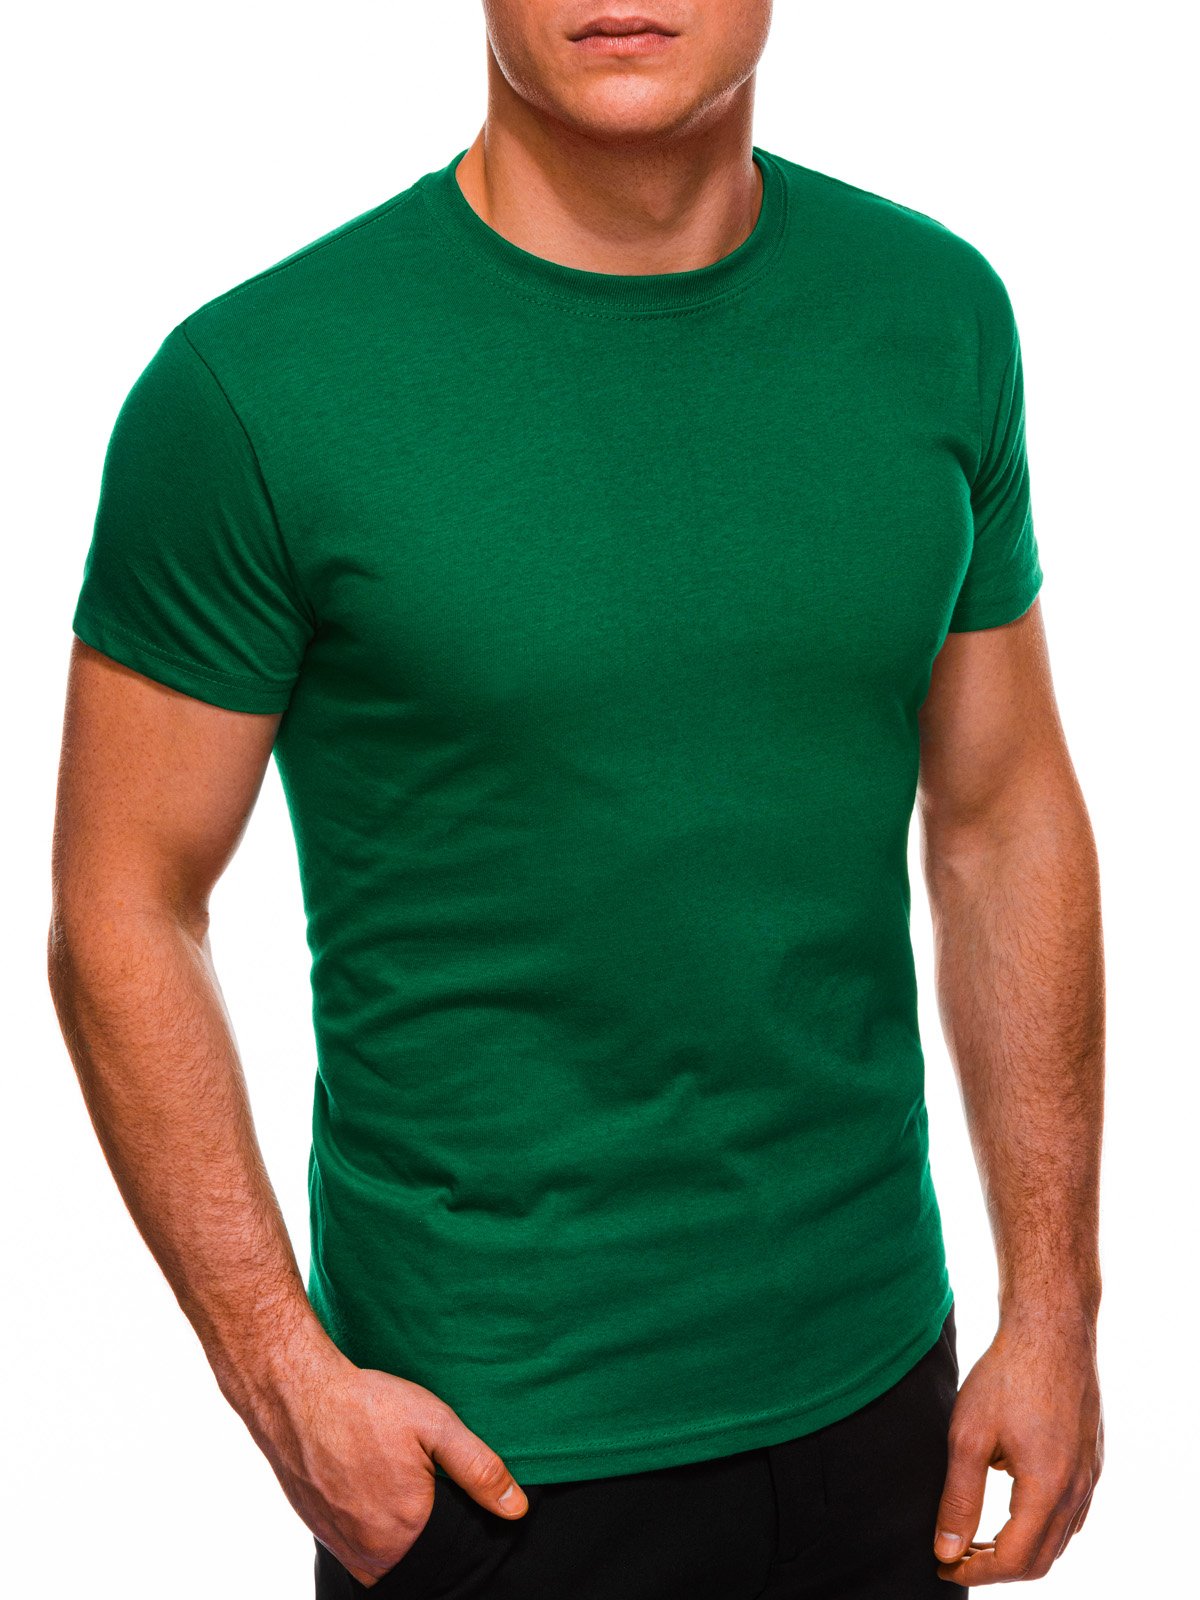 Men's plain t-shirt S970 - green | MODONE wholesale - Clothing For Men